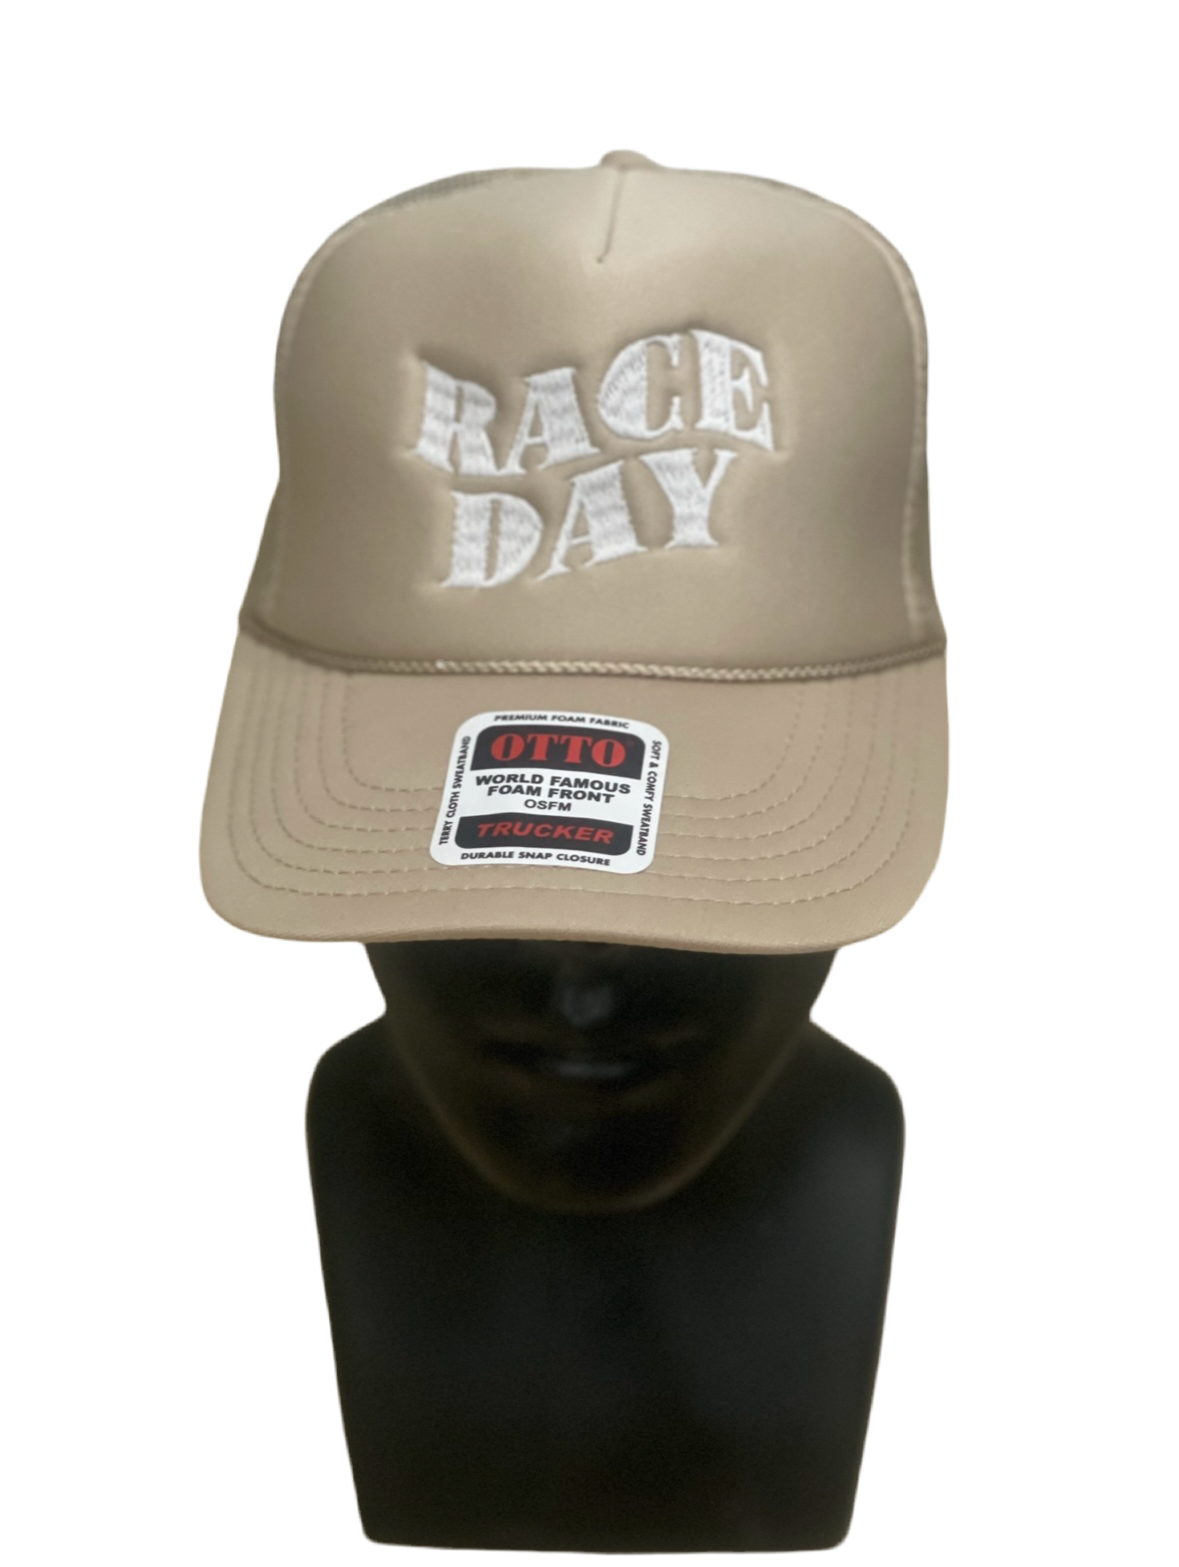 Ladies Race Day Trucker Style SnapBack Hat (Tan)